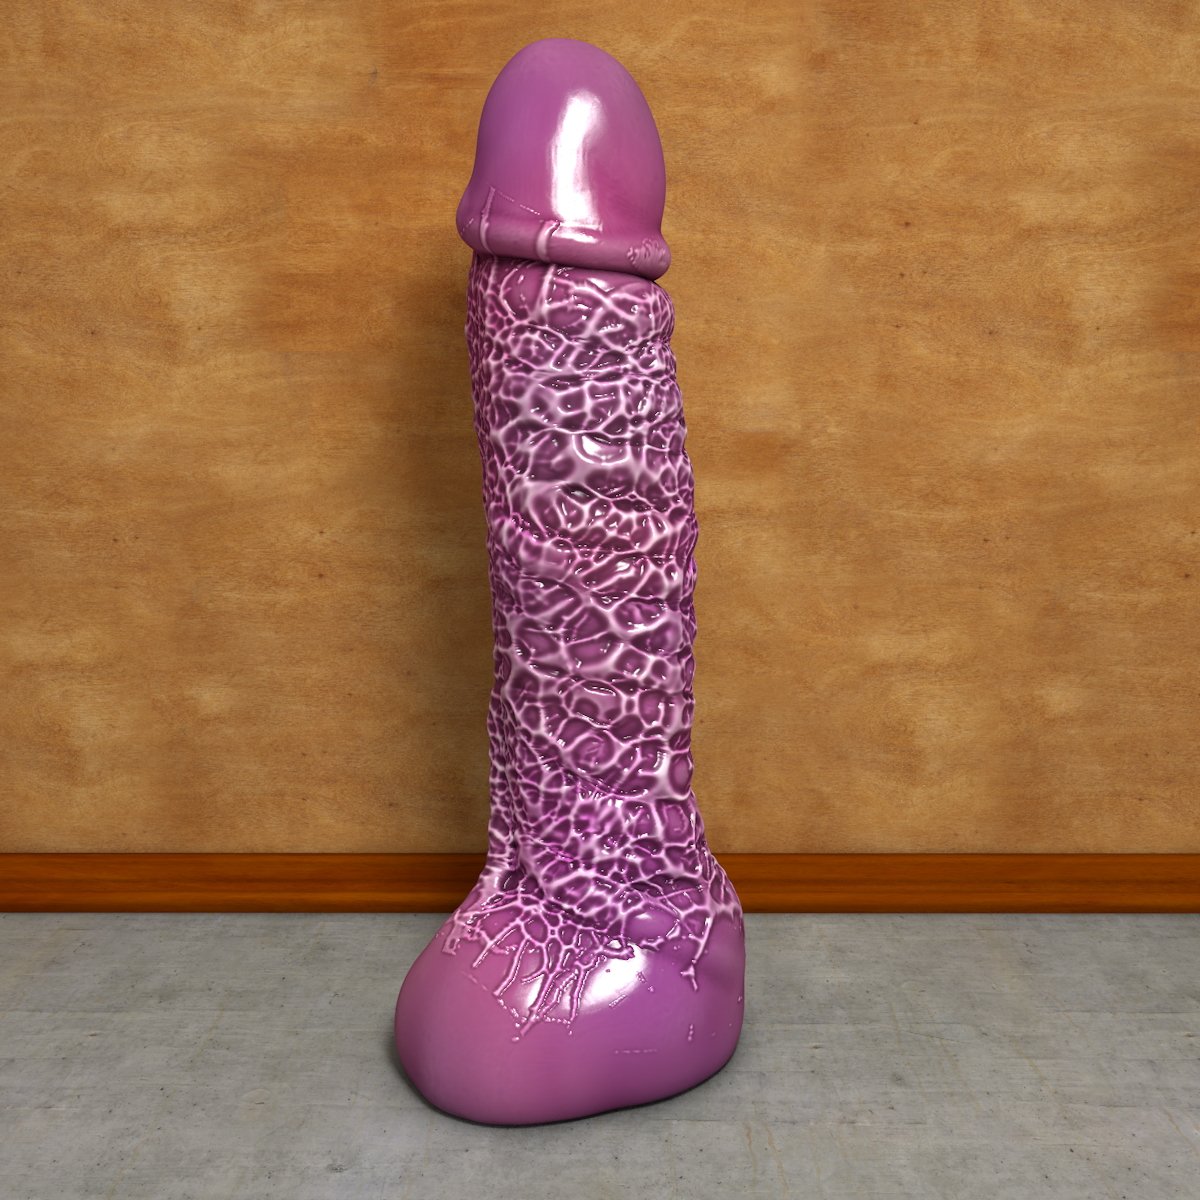 Caratteri. large human pink dildo toy Modelli 3D. 